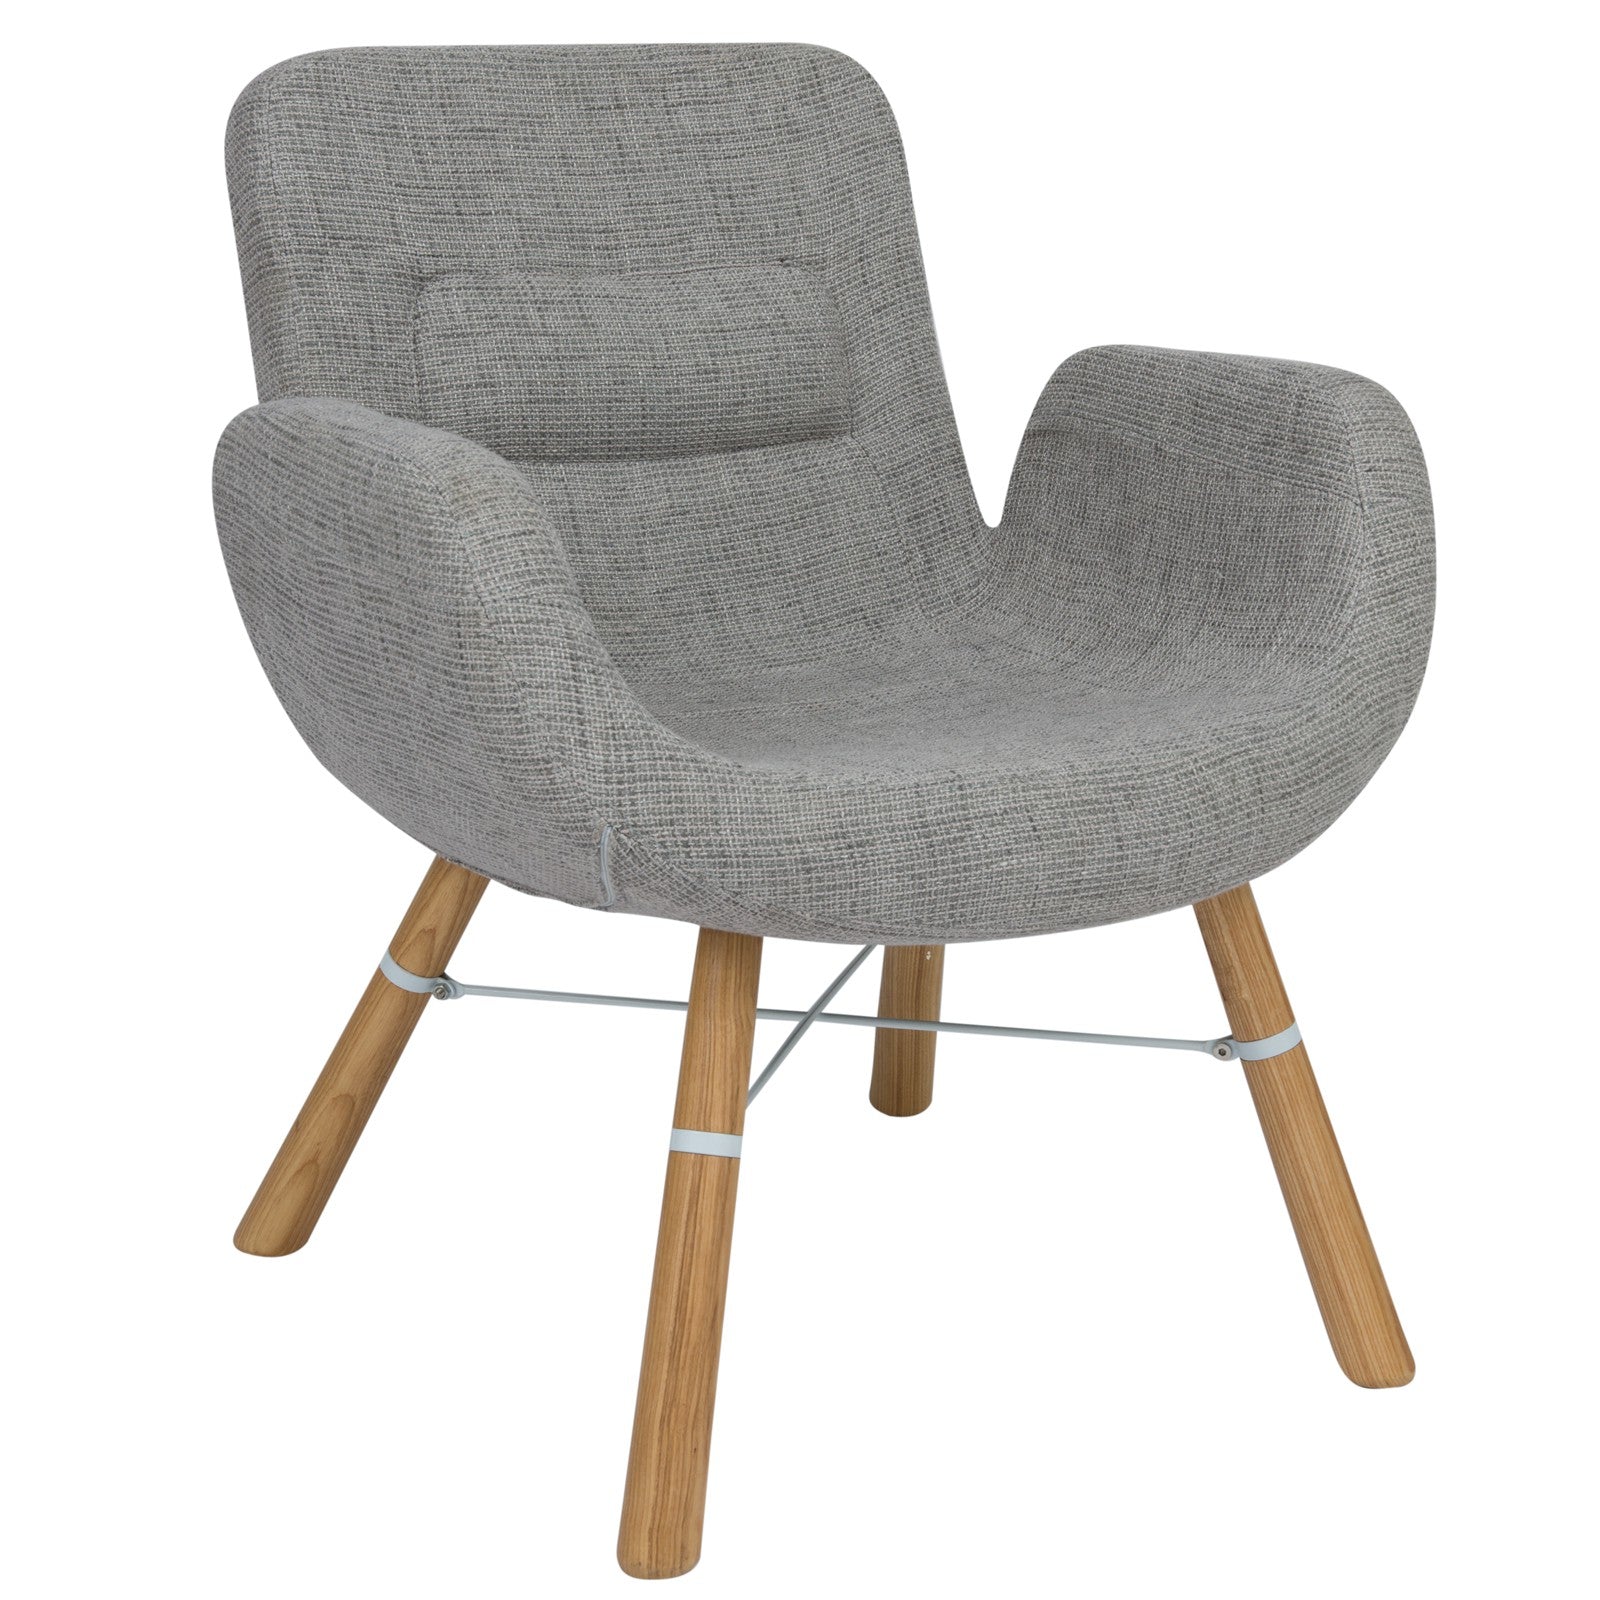 Milton Grey Accent Chair - living-essentials